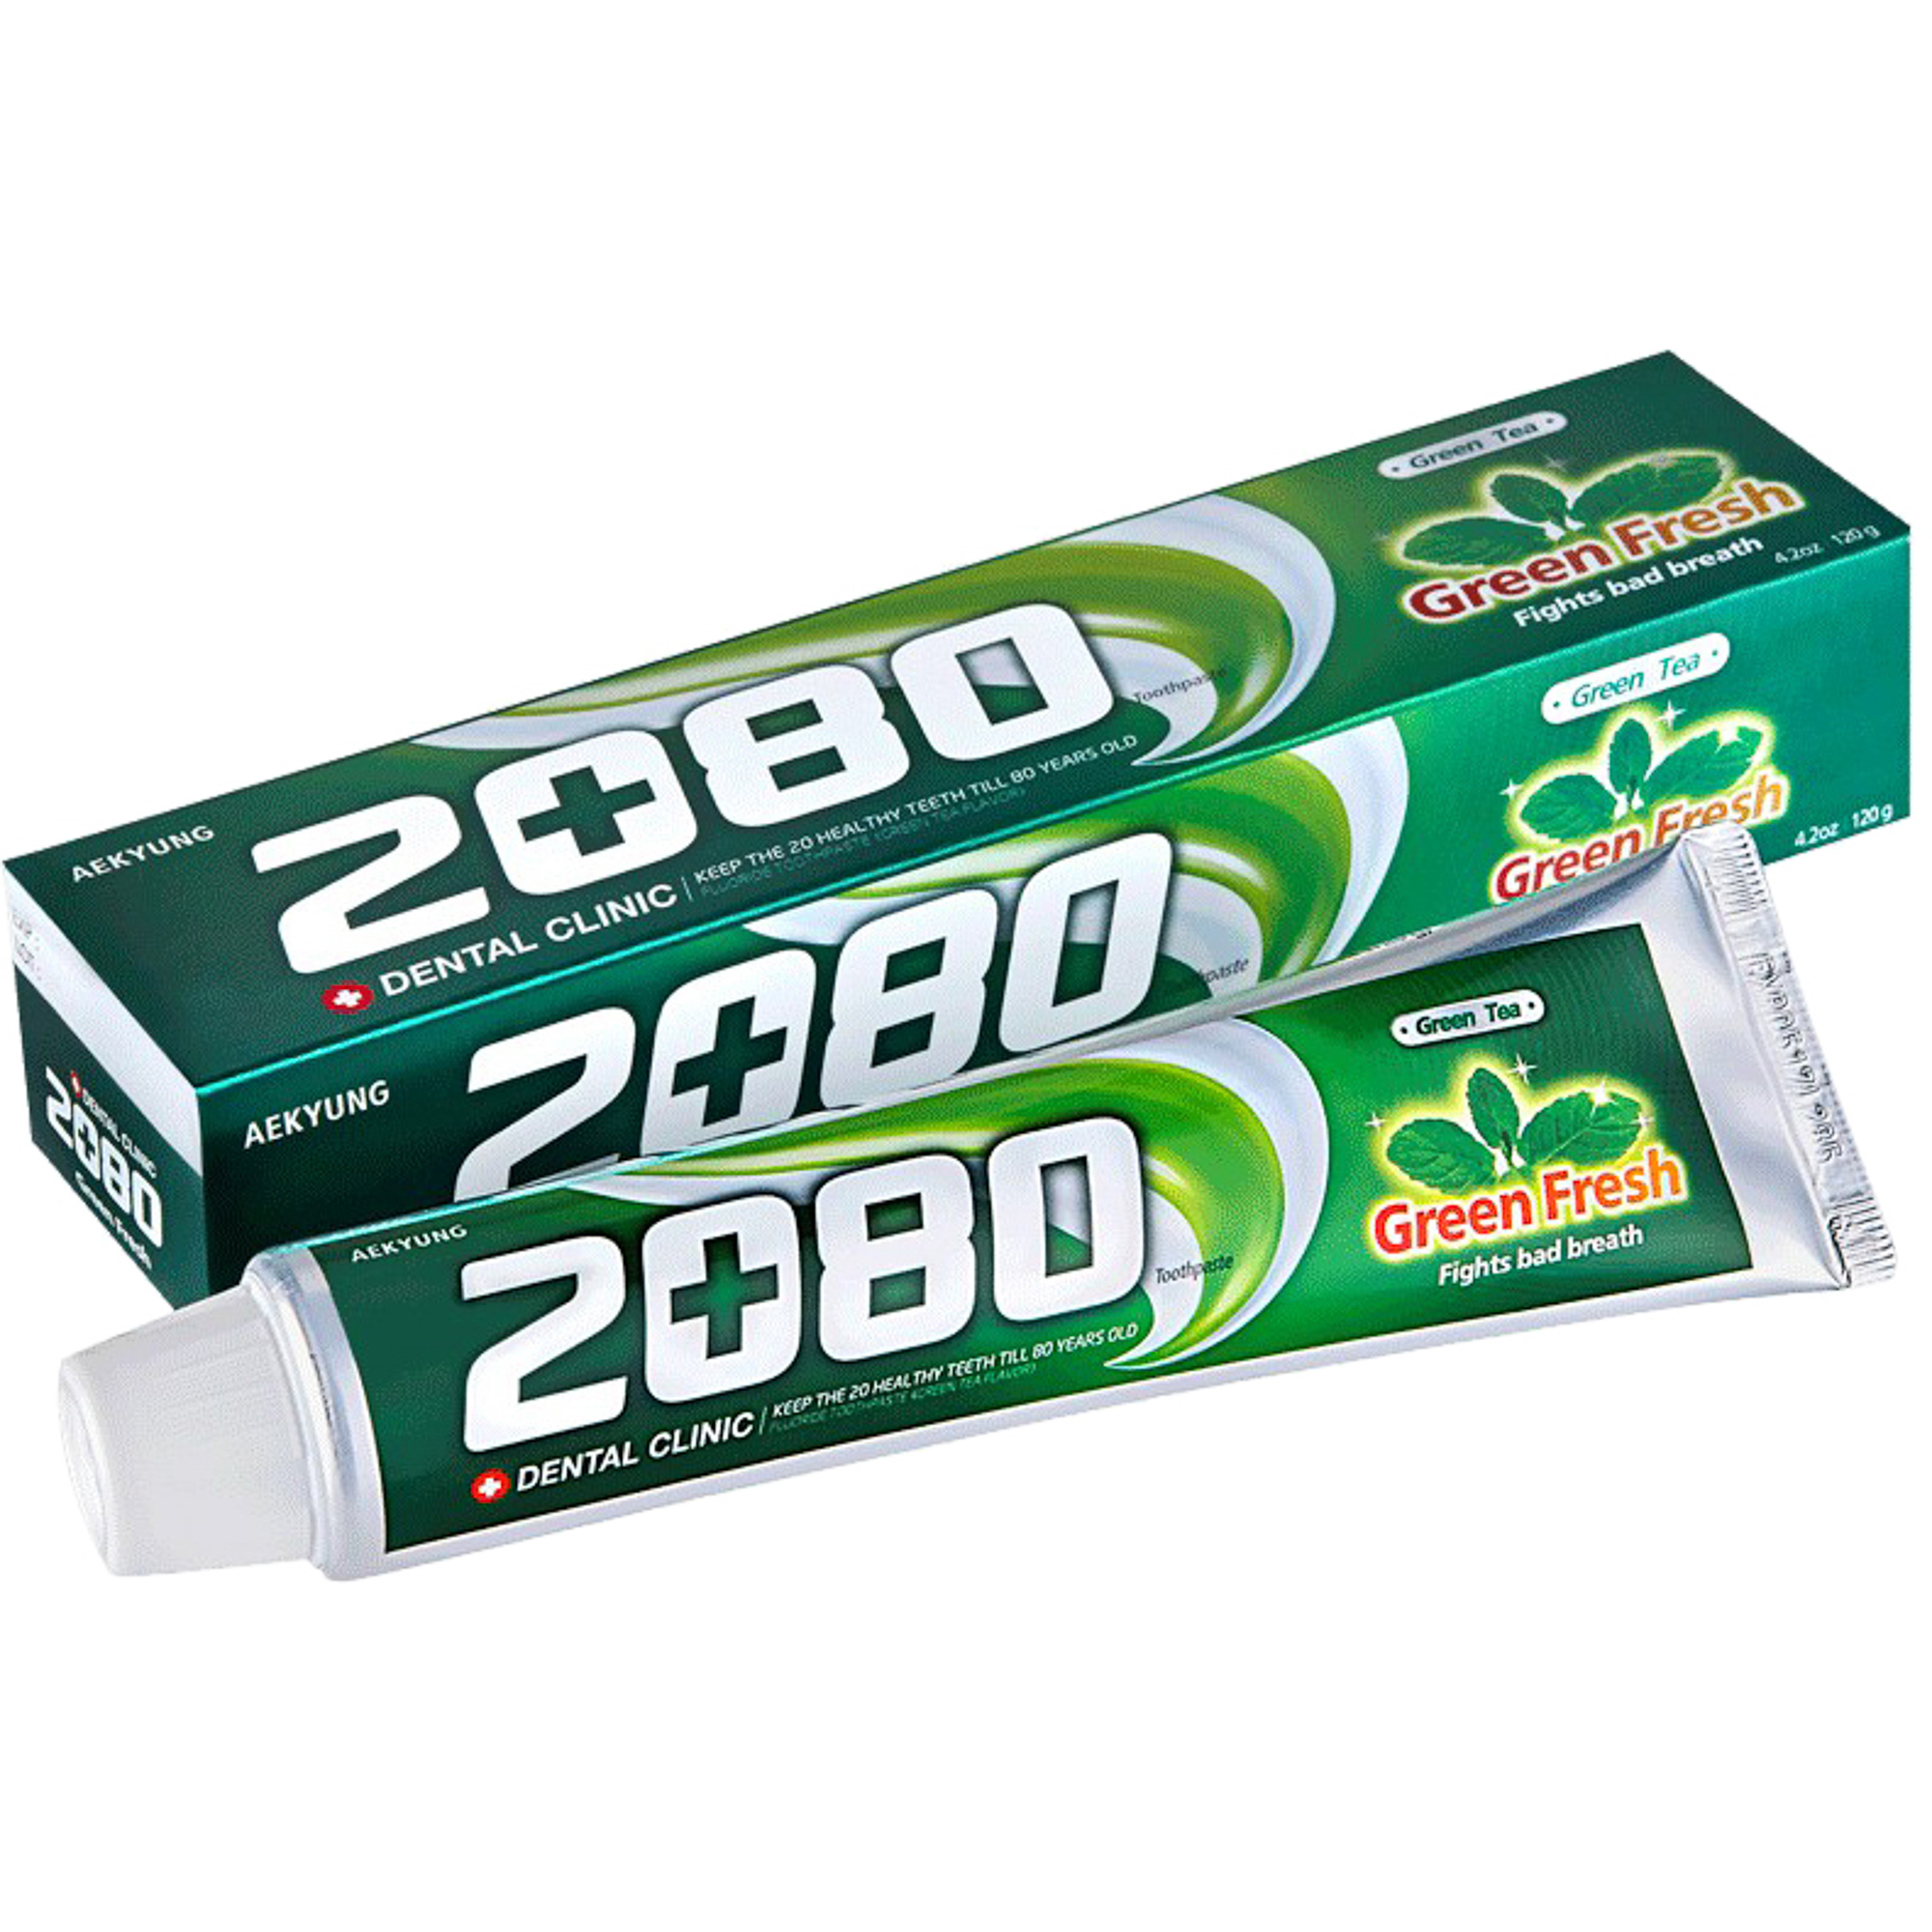 Зубная паста Kerasys Dental Clinic 2080 Green Fresh Зеленый чай 120 г зубная паста kerasys dentalsys nicotare для курильщиков 130 г